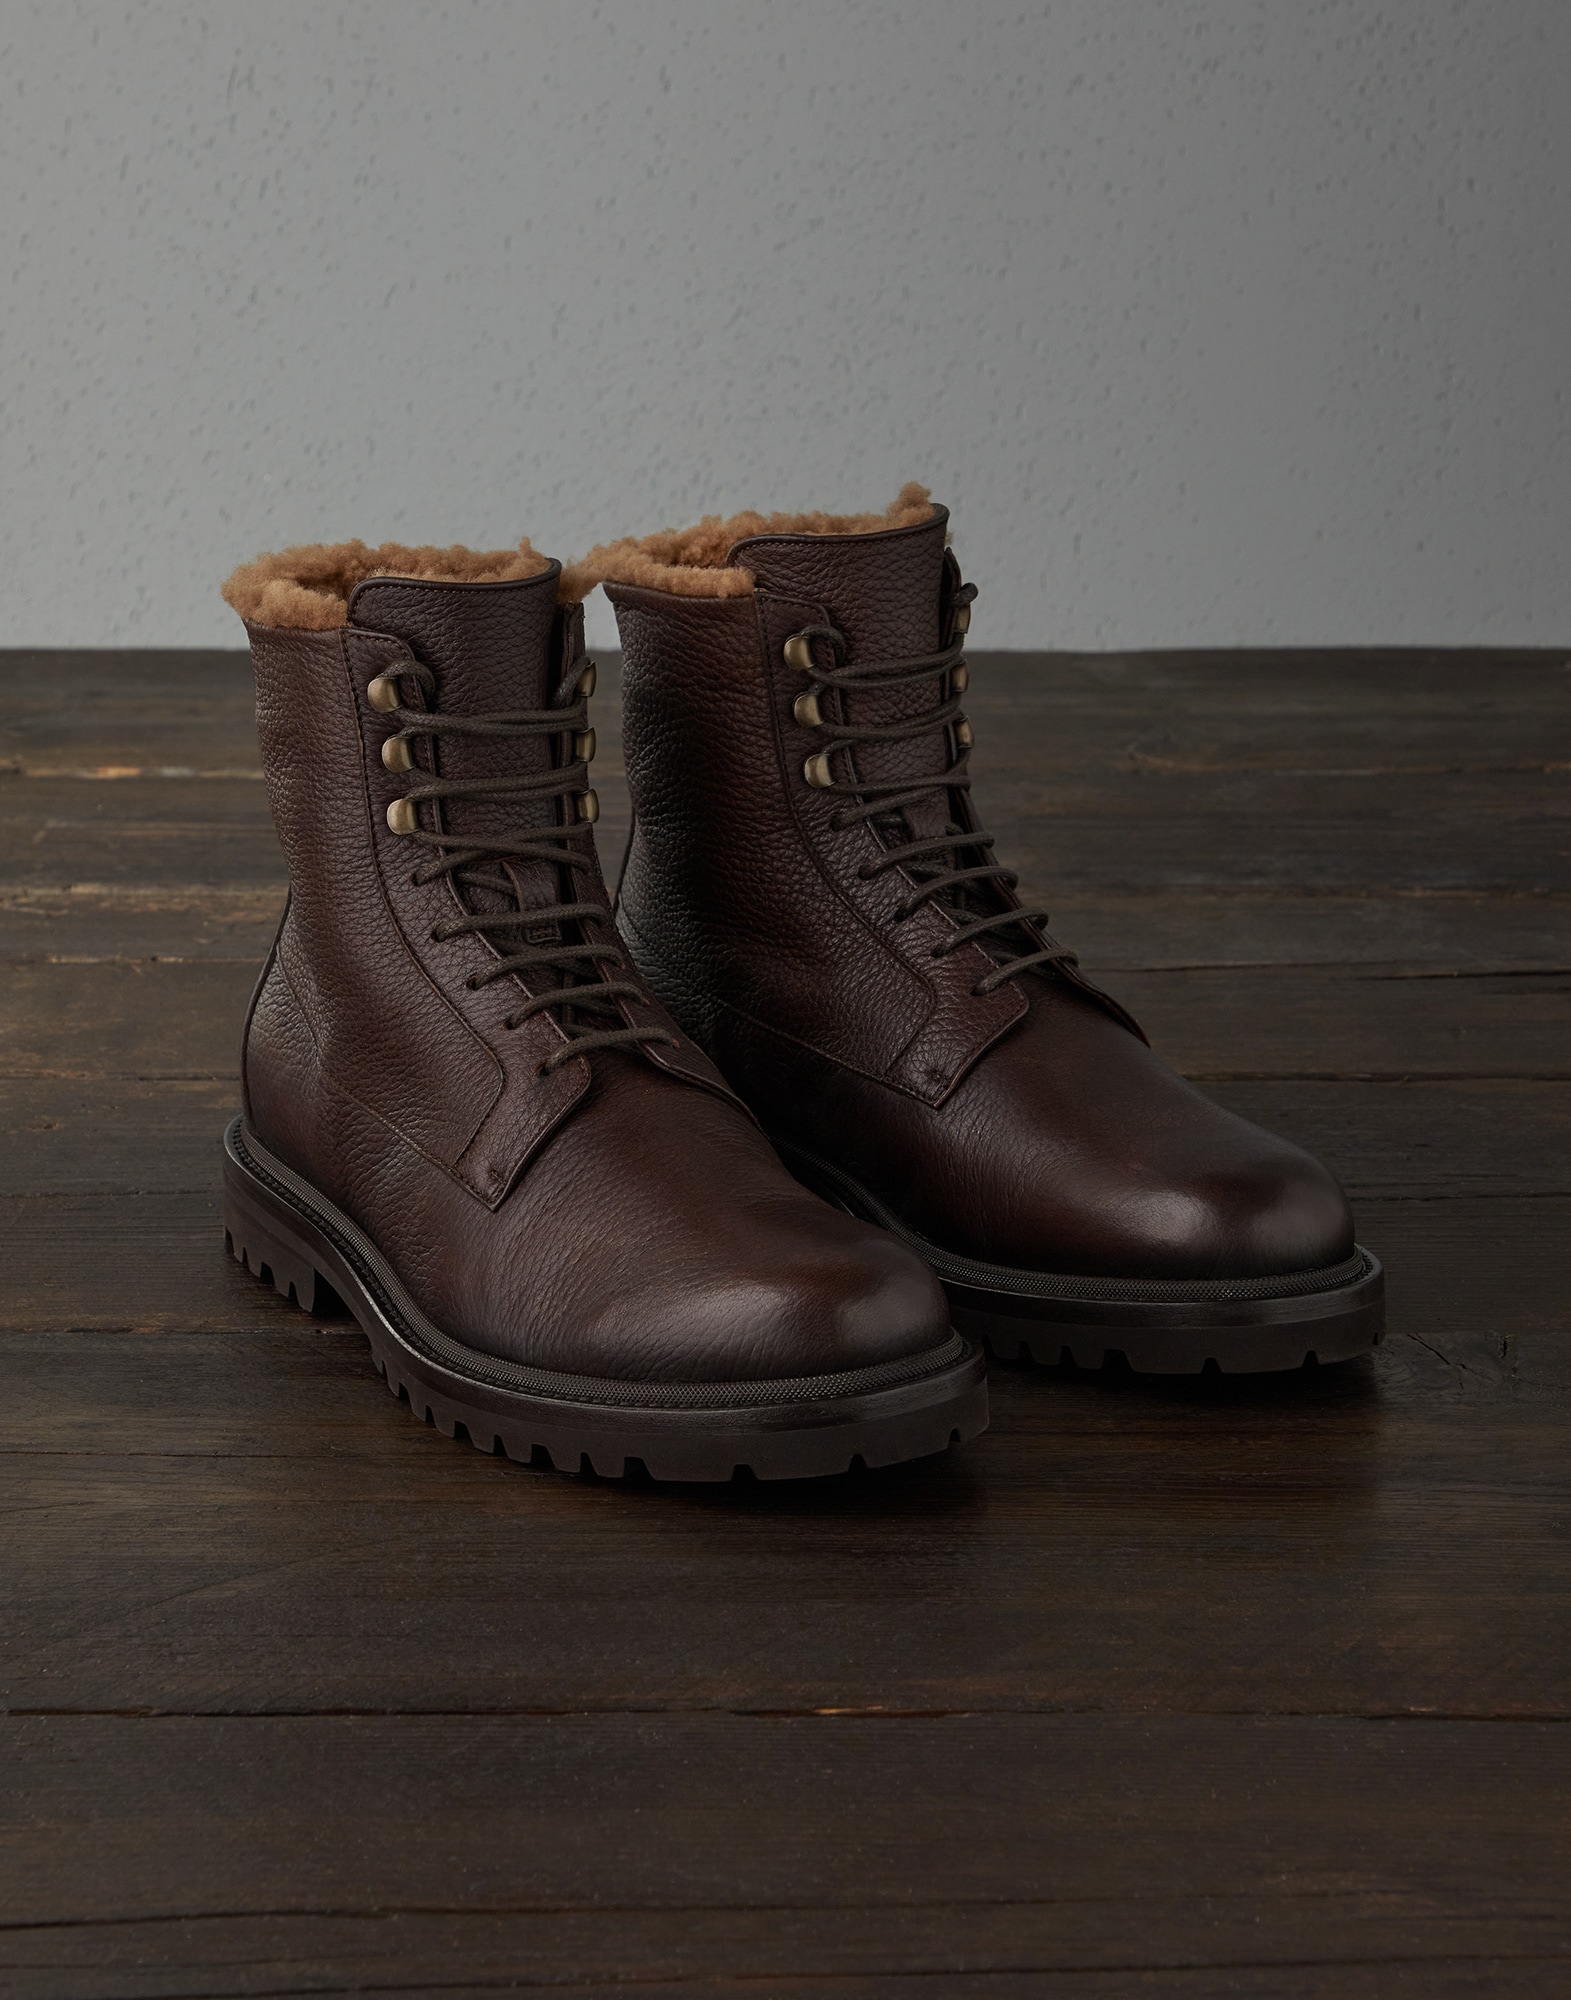 Deerskin boots